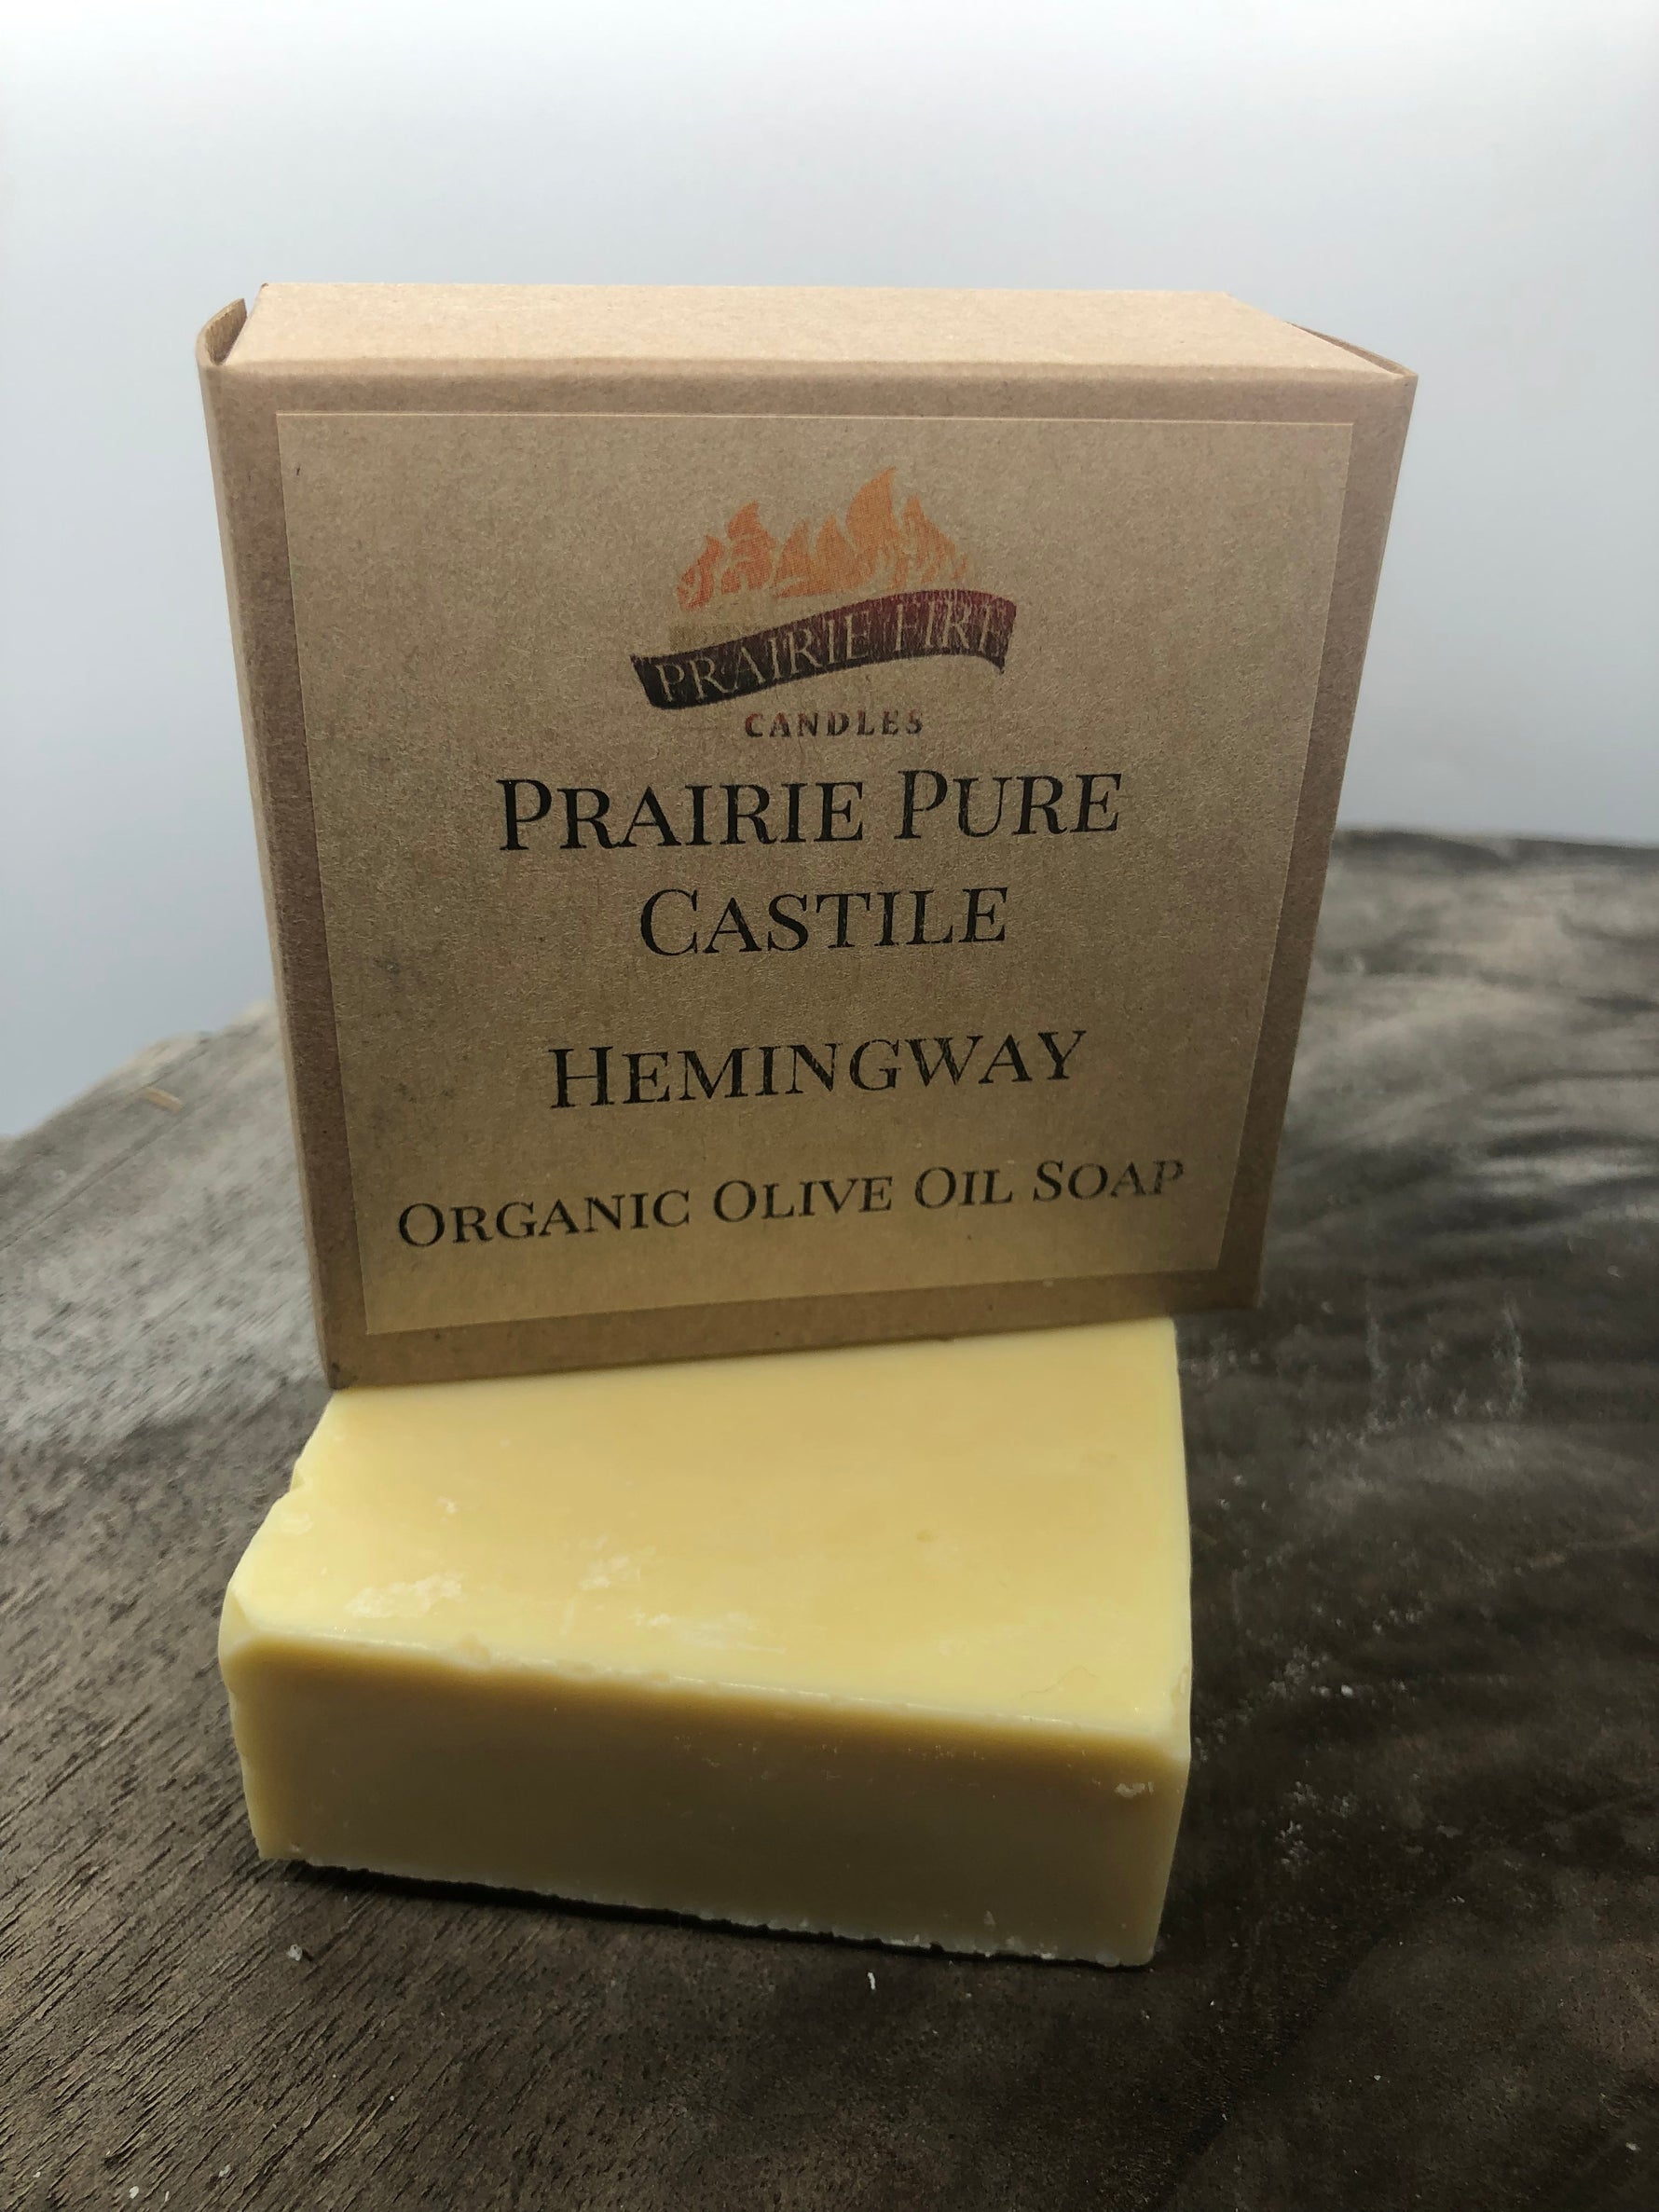 Hemingway Real Castile Organic Olive Oil Soap for Sensitive Skin - Dye Free - 100% Certified Organic Extra Virgin Olive Oil-1